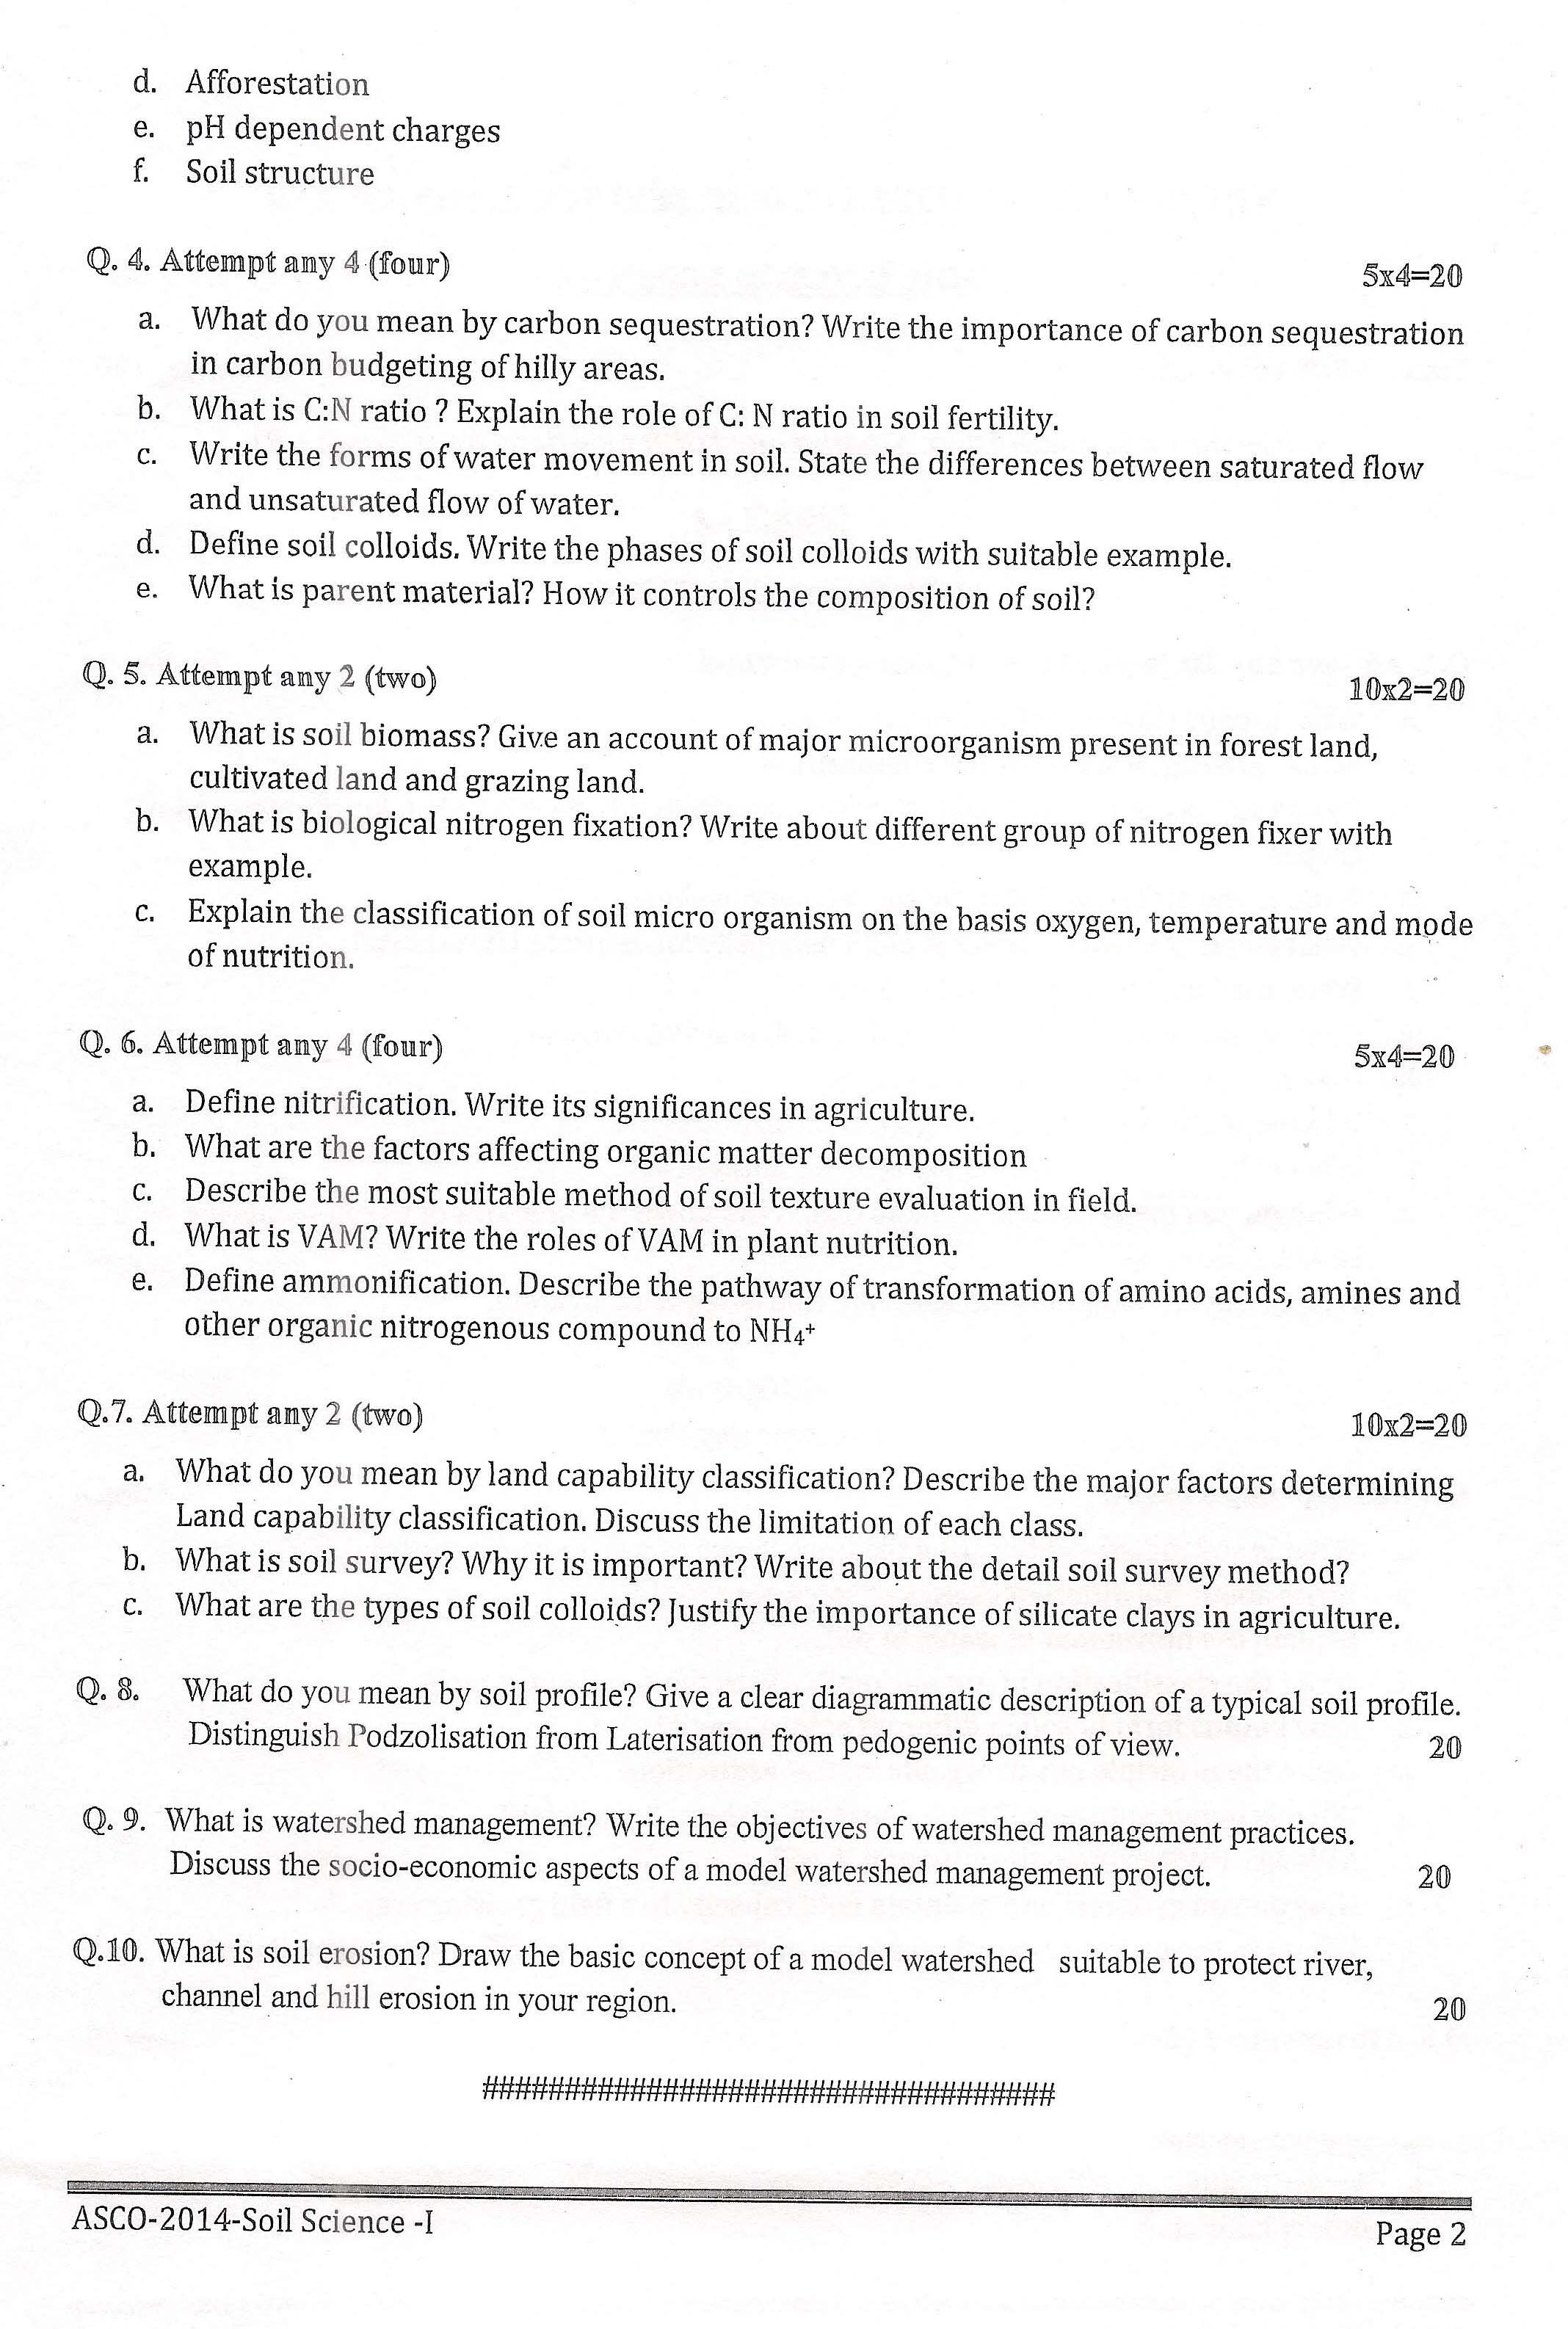 APPSC ASCO Soil Science Paper I Exam Question Paper 2014 2